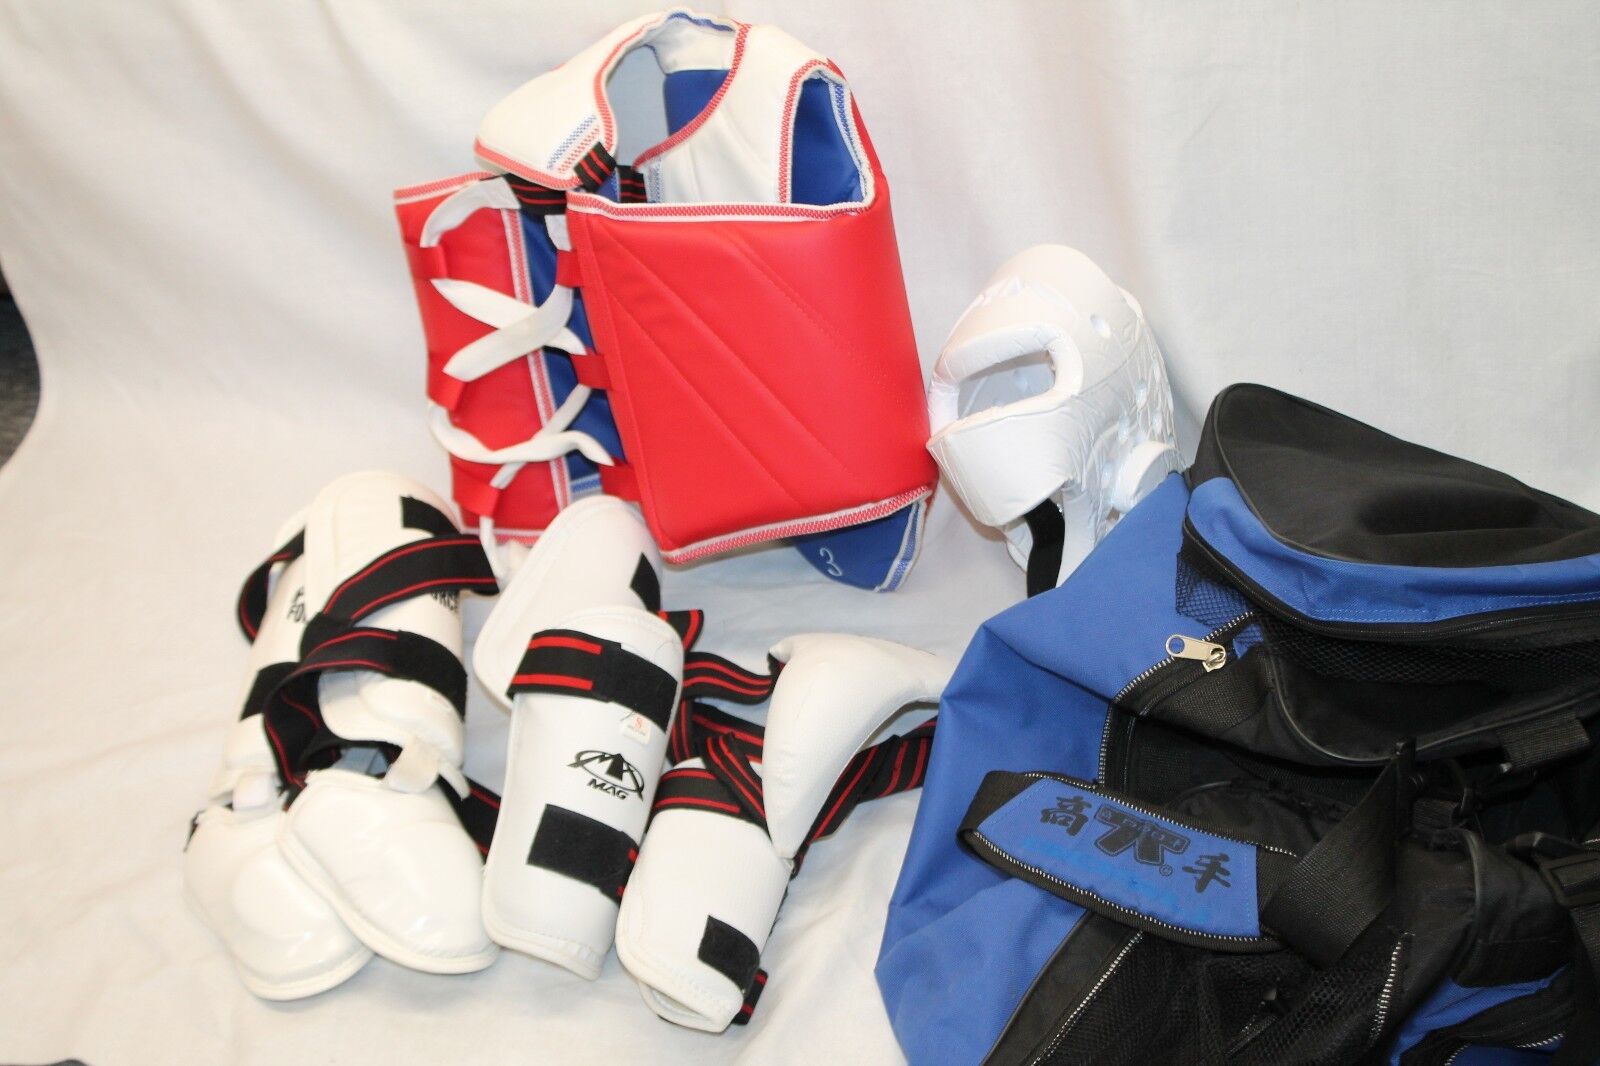 Martial Arts Karate Taekwondo Sparring Gear Protective Set Size S Multi Color